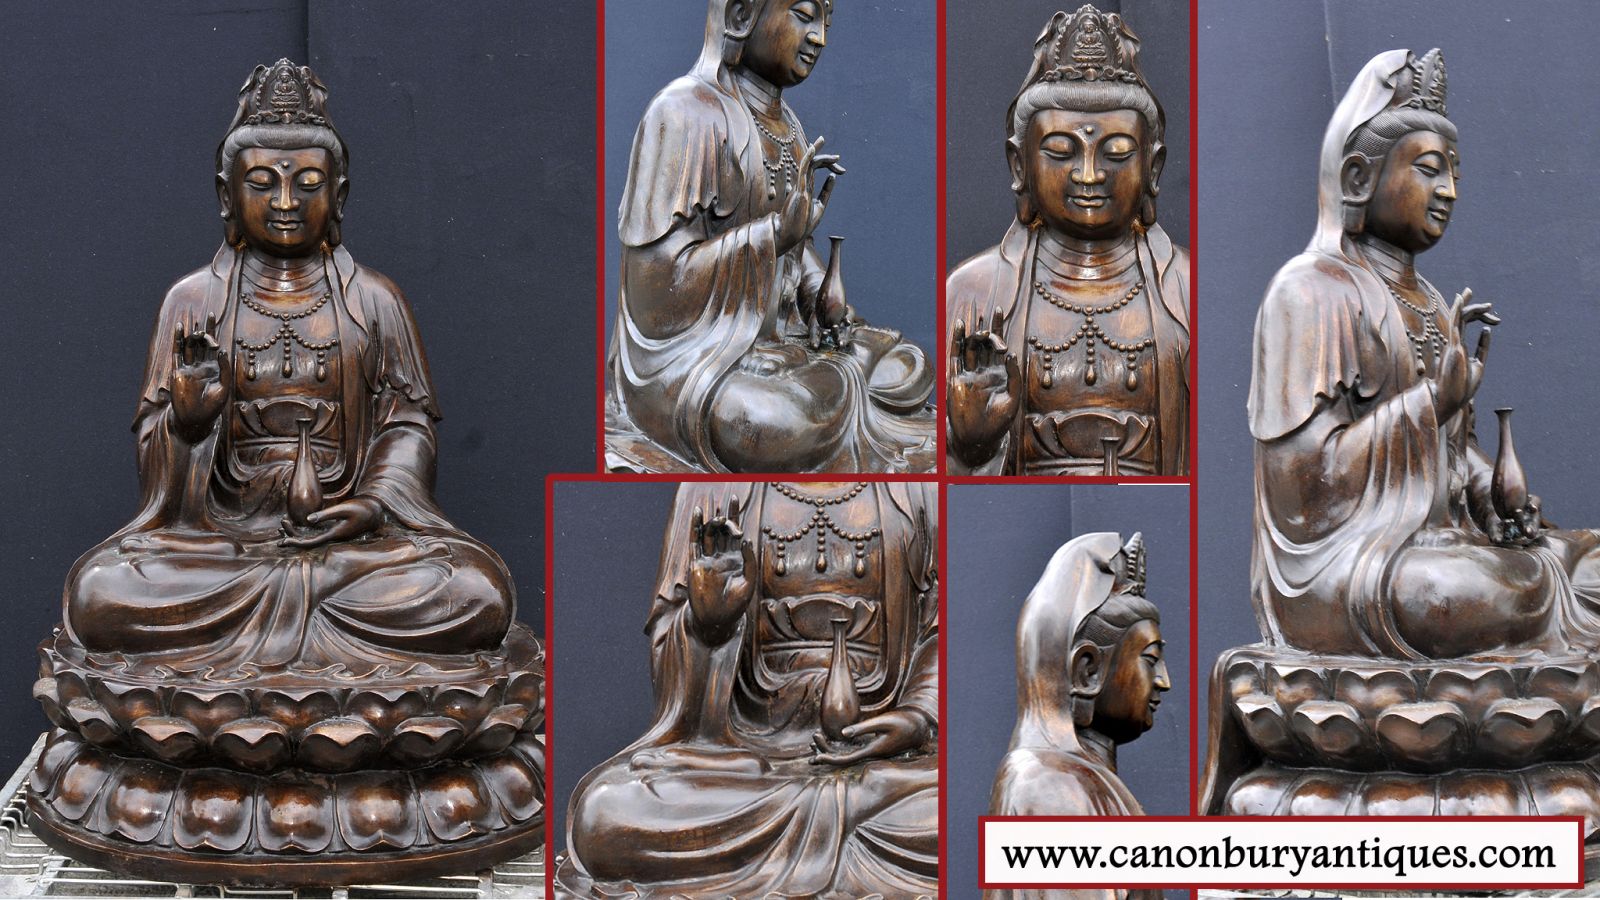 Large Bronze Nepalese Buddha Statue - Buddhism Lotus Pose Buddhist Art